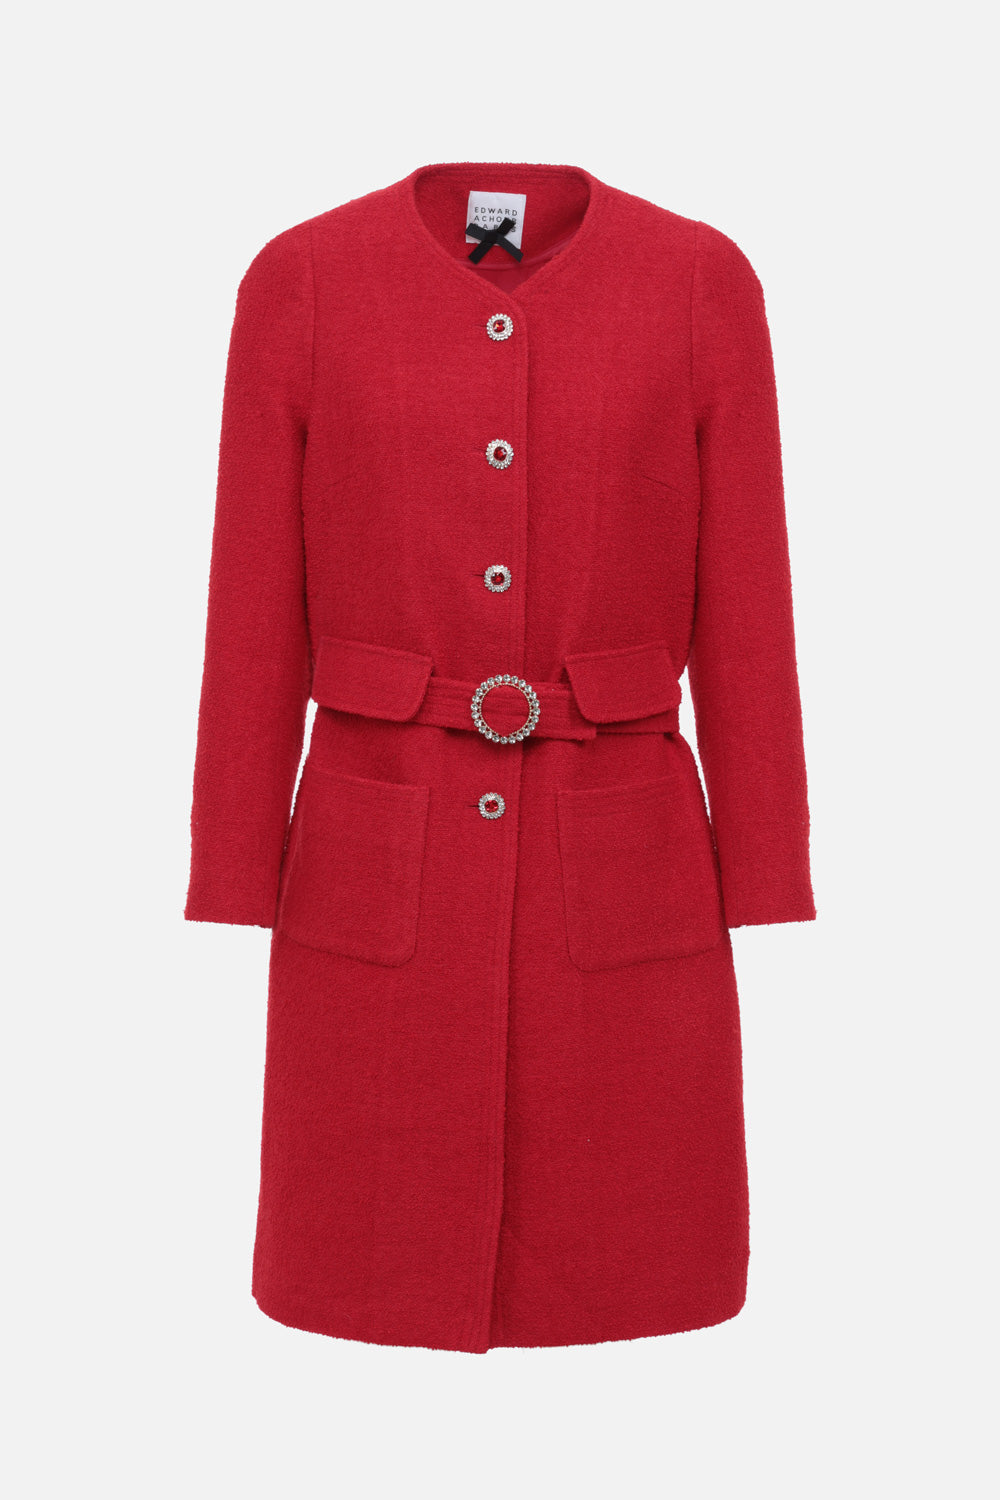 Long red wool jacket